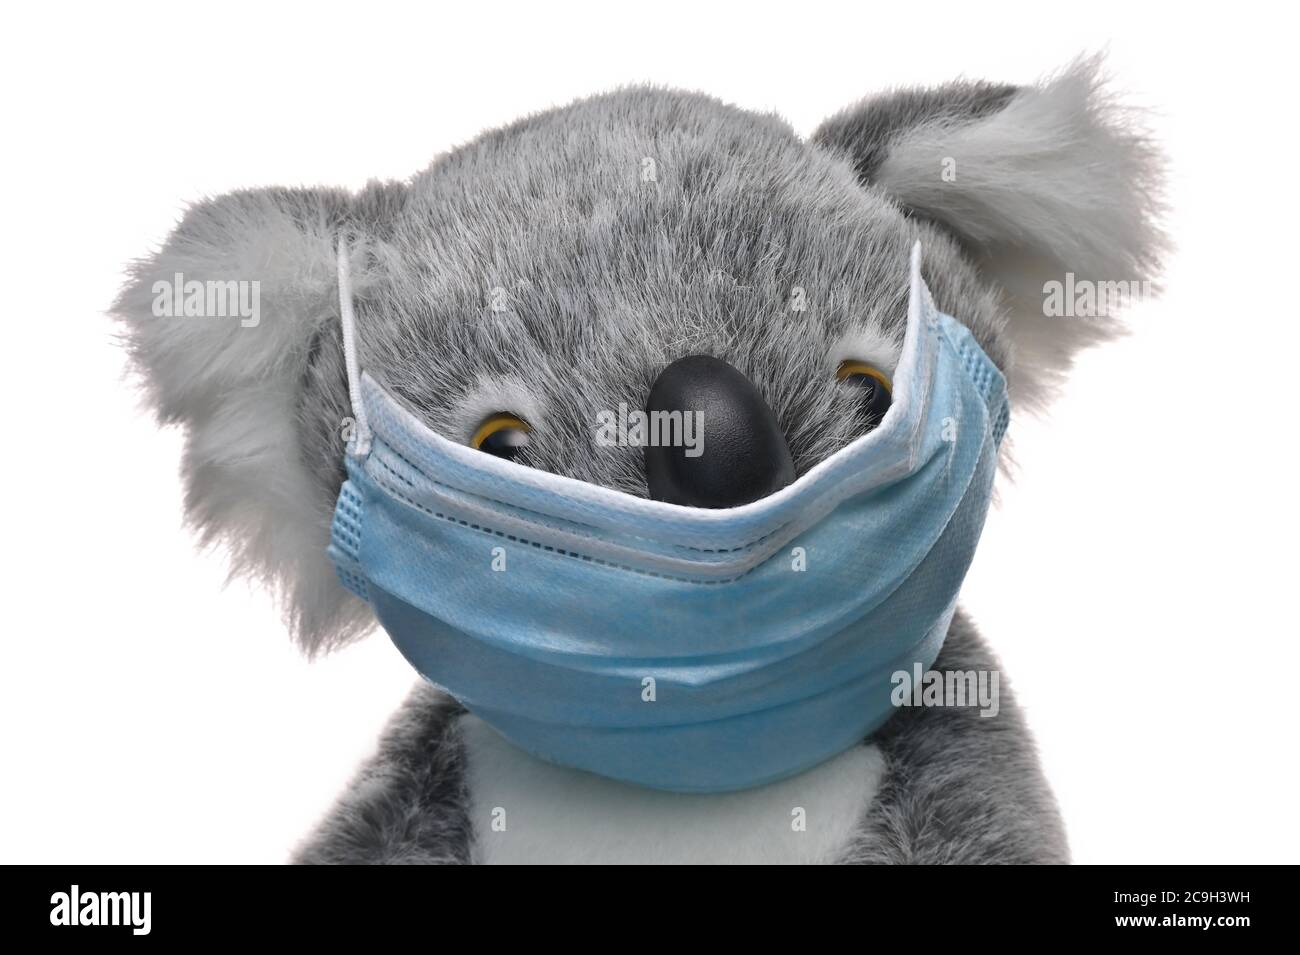 Soft toy koala bear from Australia wearing protective, disposable light blue face mask. Coronavirus, Covid-19 pandemic theme. Stock Photo